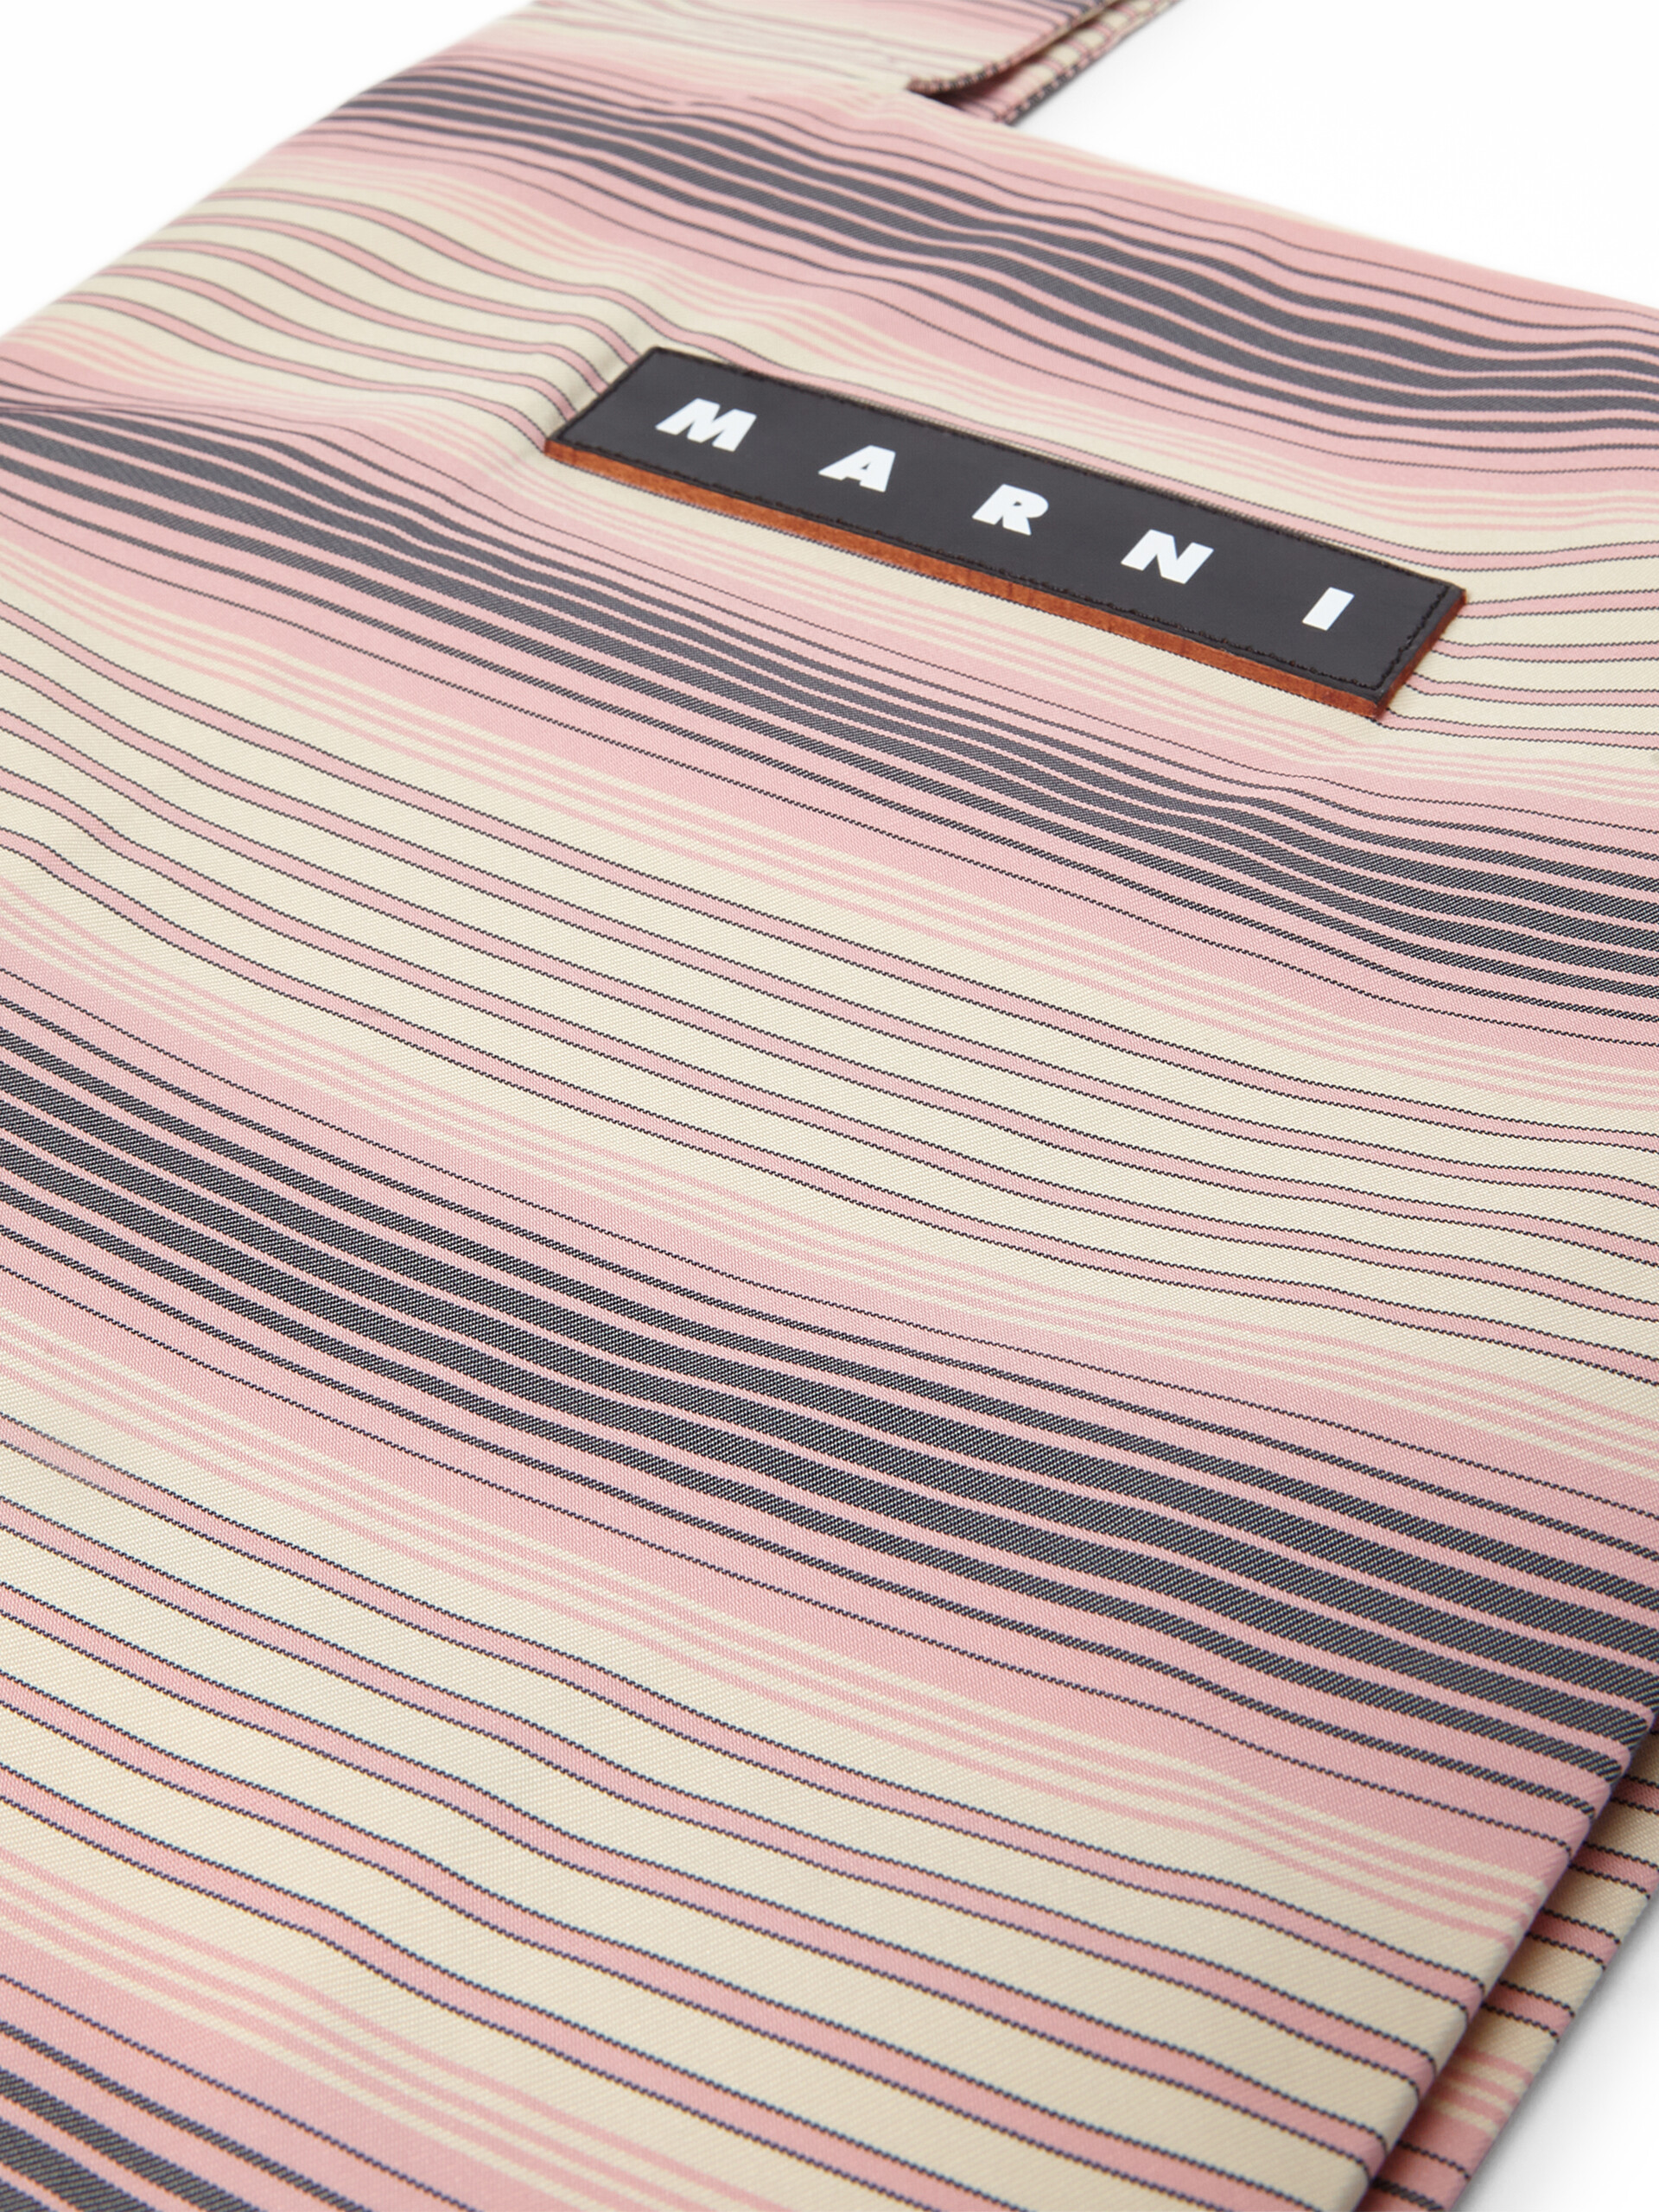 MARNI MARKET shopping bag with pink horizontal striped print - Bags - Image 4